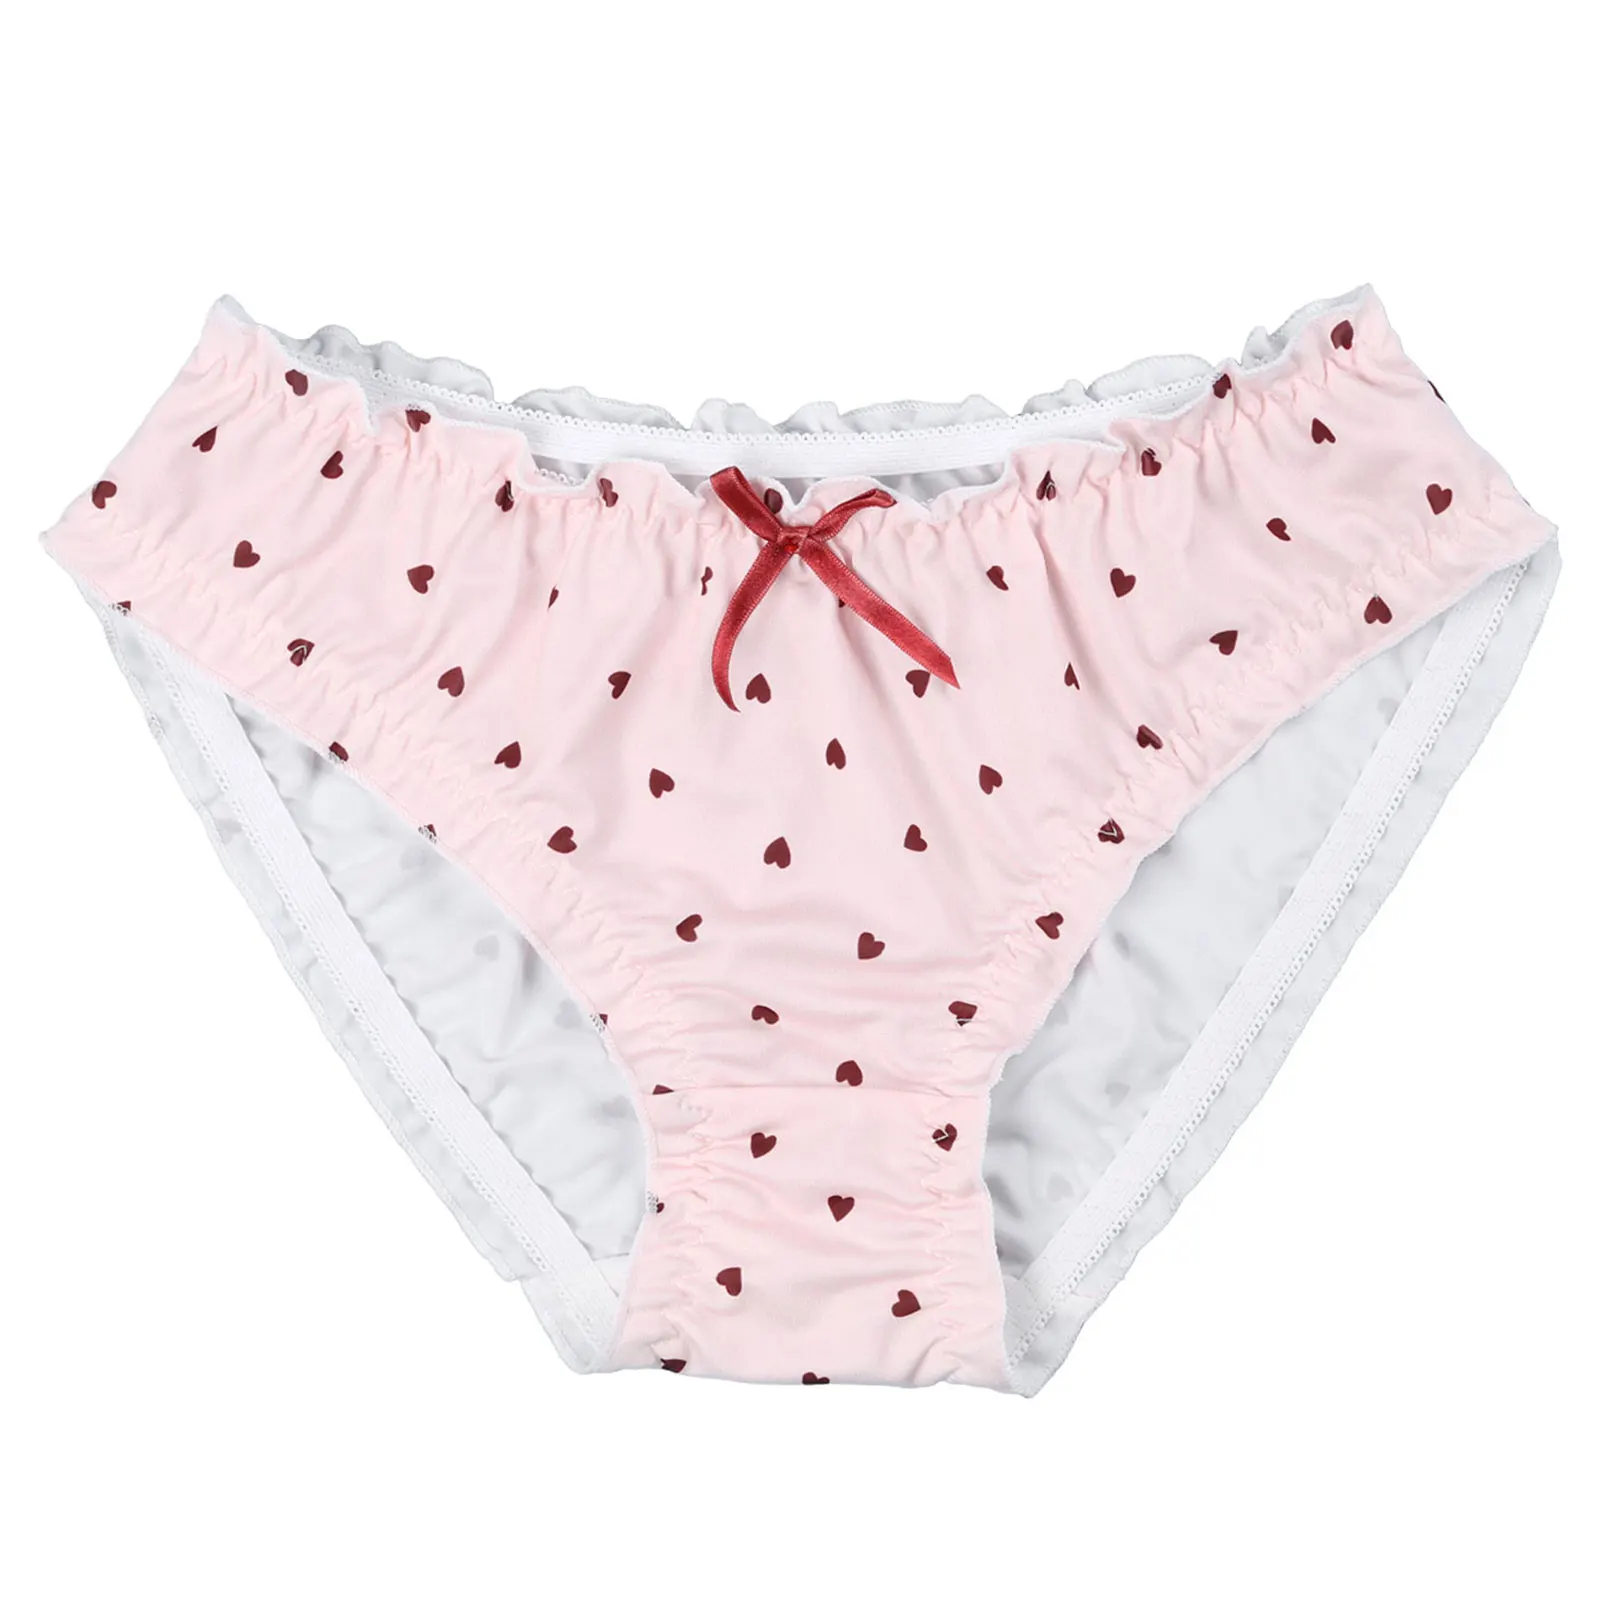 Lovely Bowknot Mens Sissy Ruffled Briefs MALE Lingerie Thong Underwear Panties 